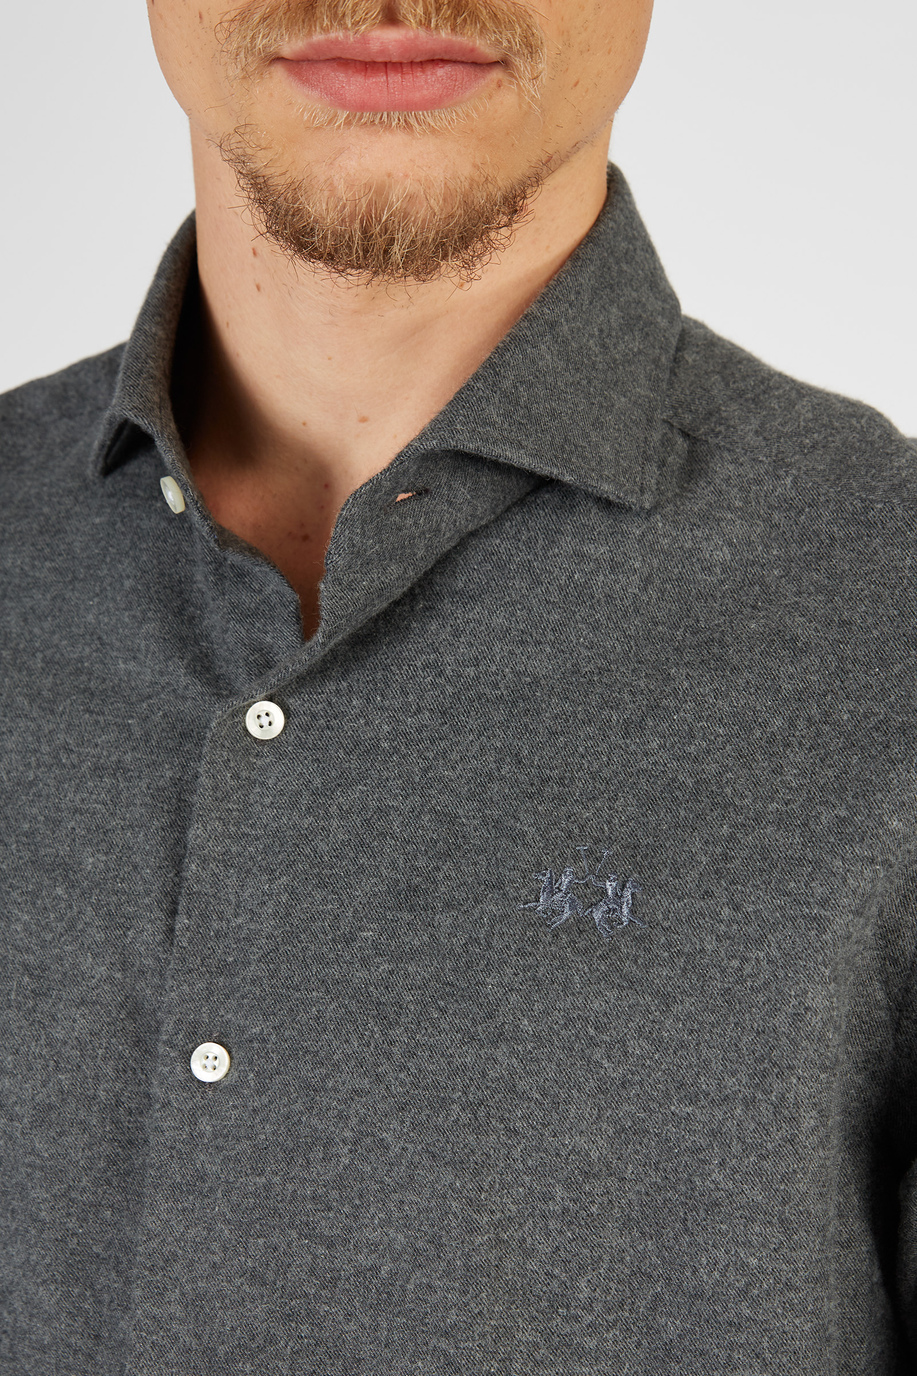 Blue Ribbon Herrenhemd mit langen Ärmeln aus Flanell Comfort Fit - Hemden | La Martina - Official Online Shop